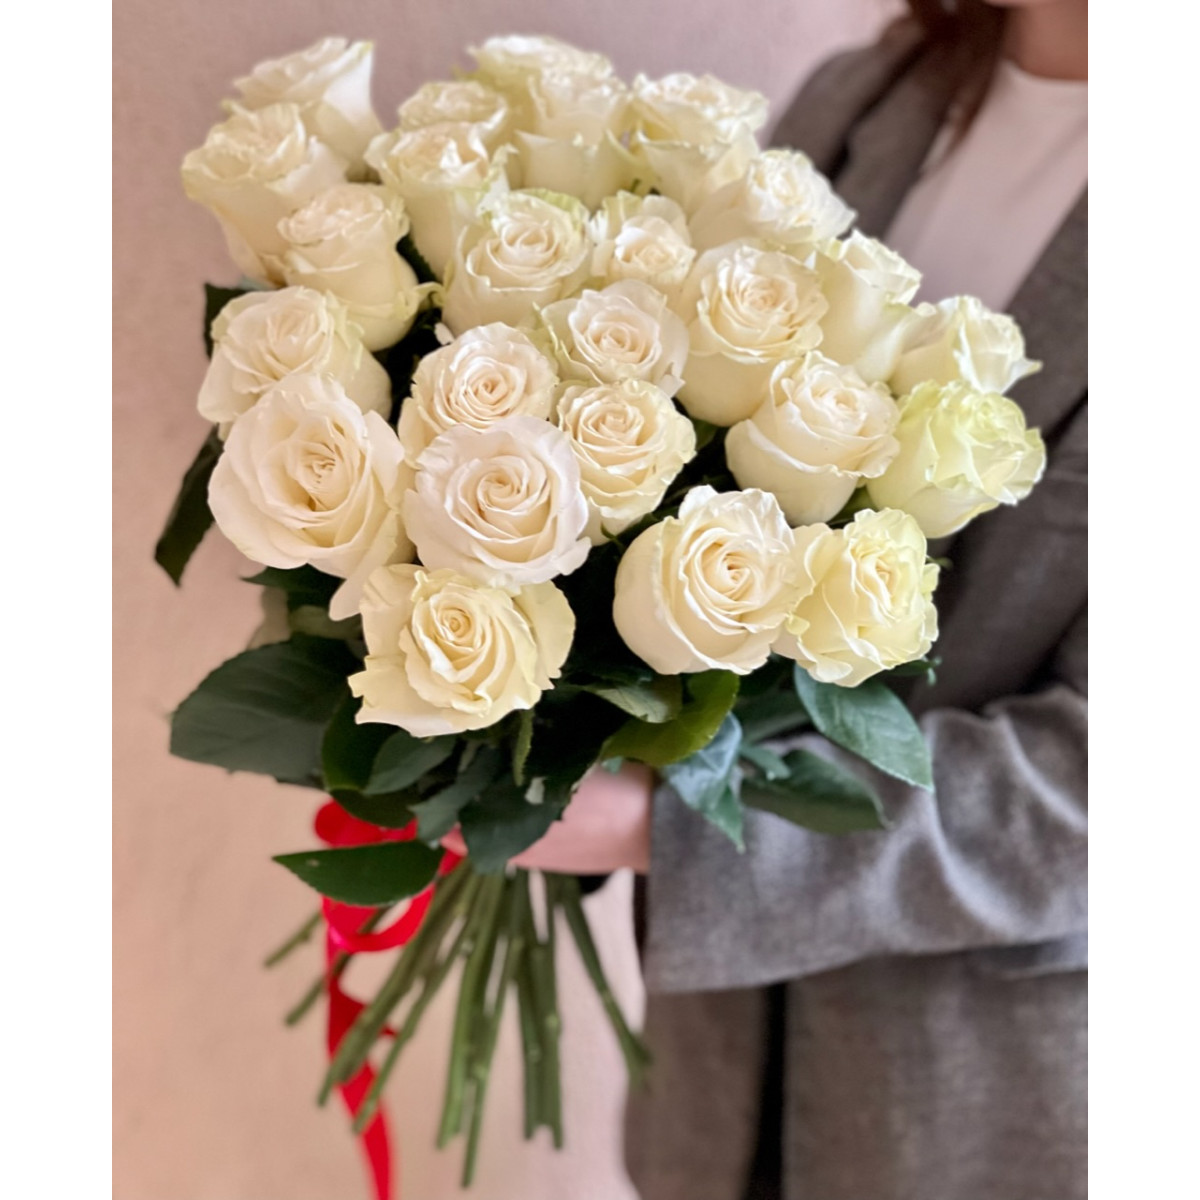 25 белых роз "Мондиаль" Эквадор 